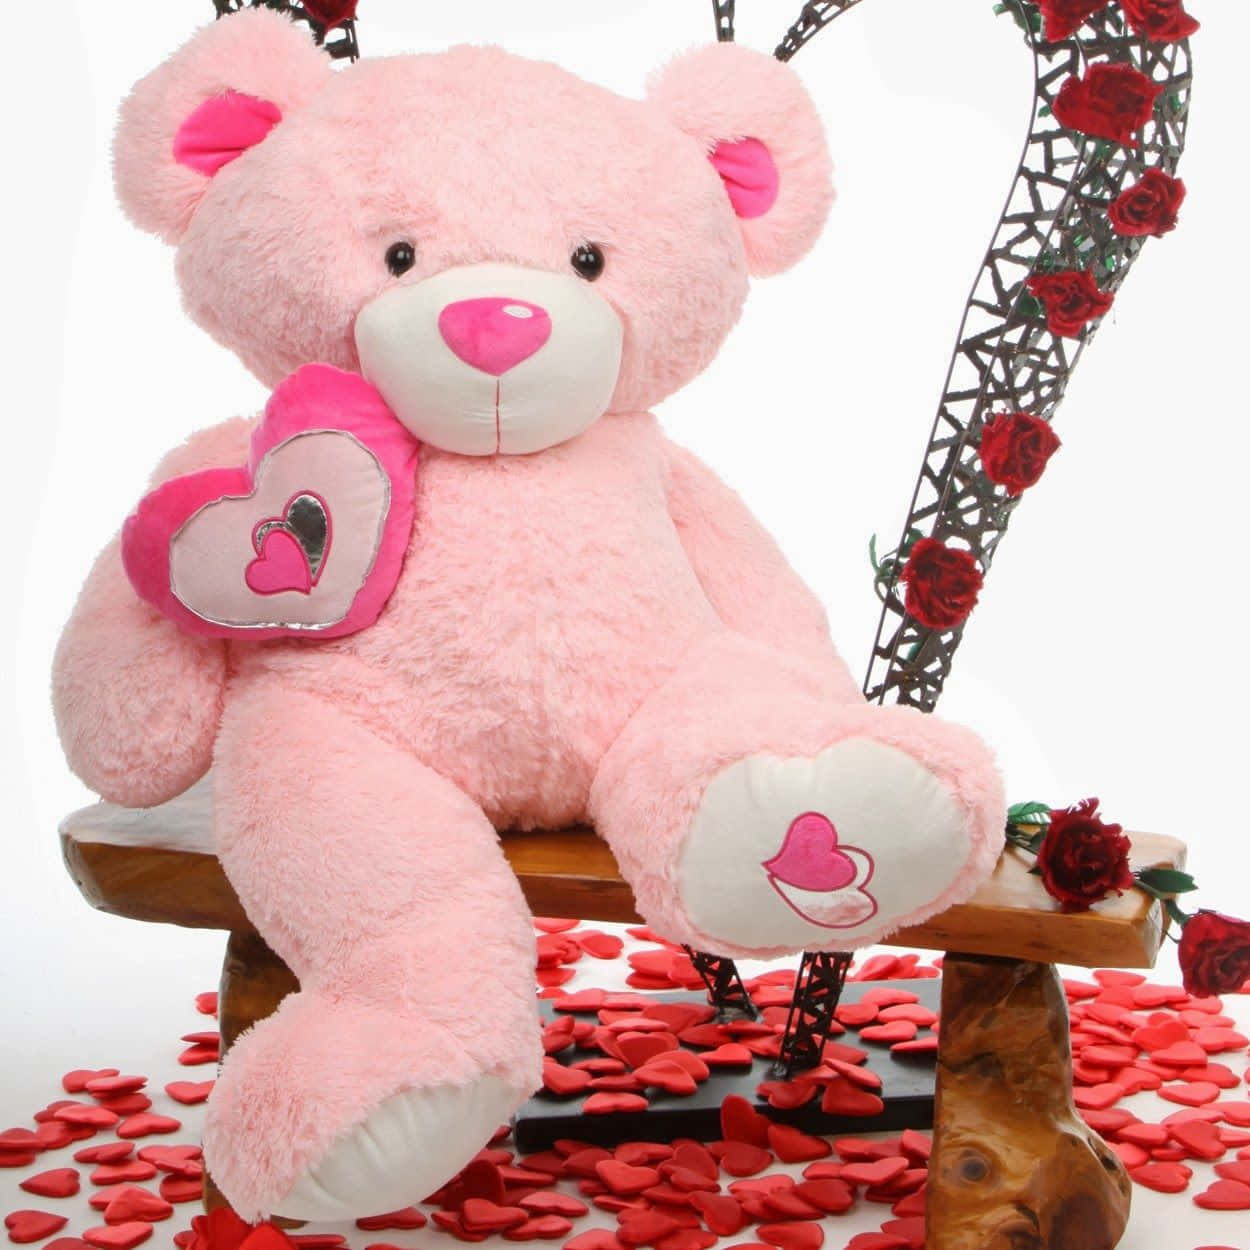 Cute Pink Teddy Bear Flowers Background